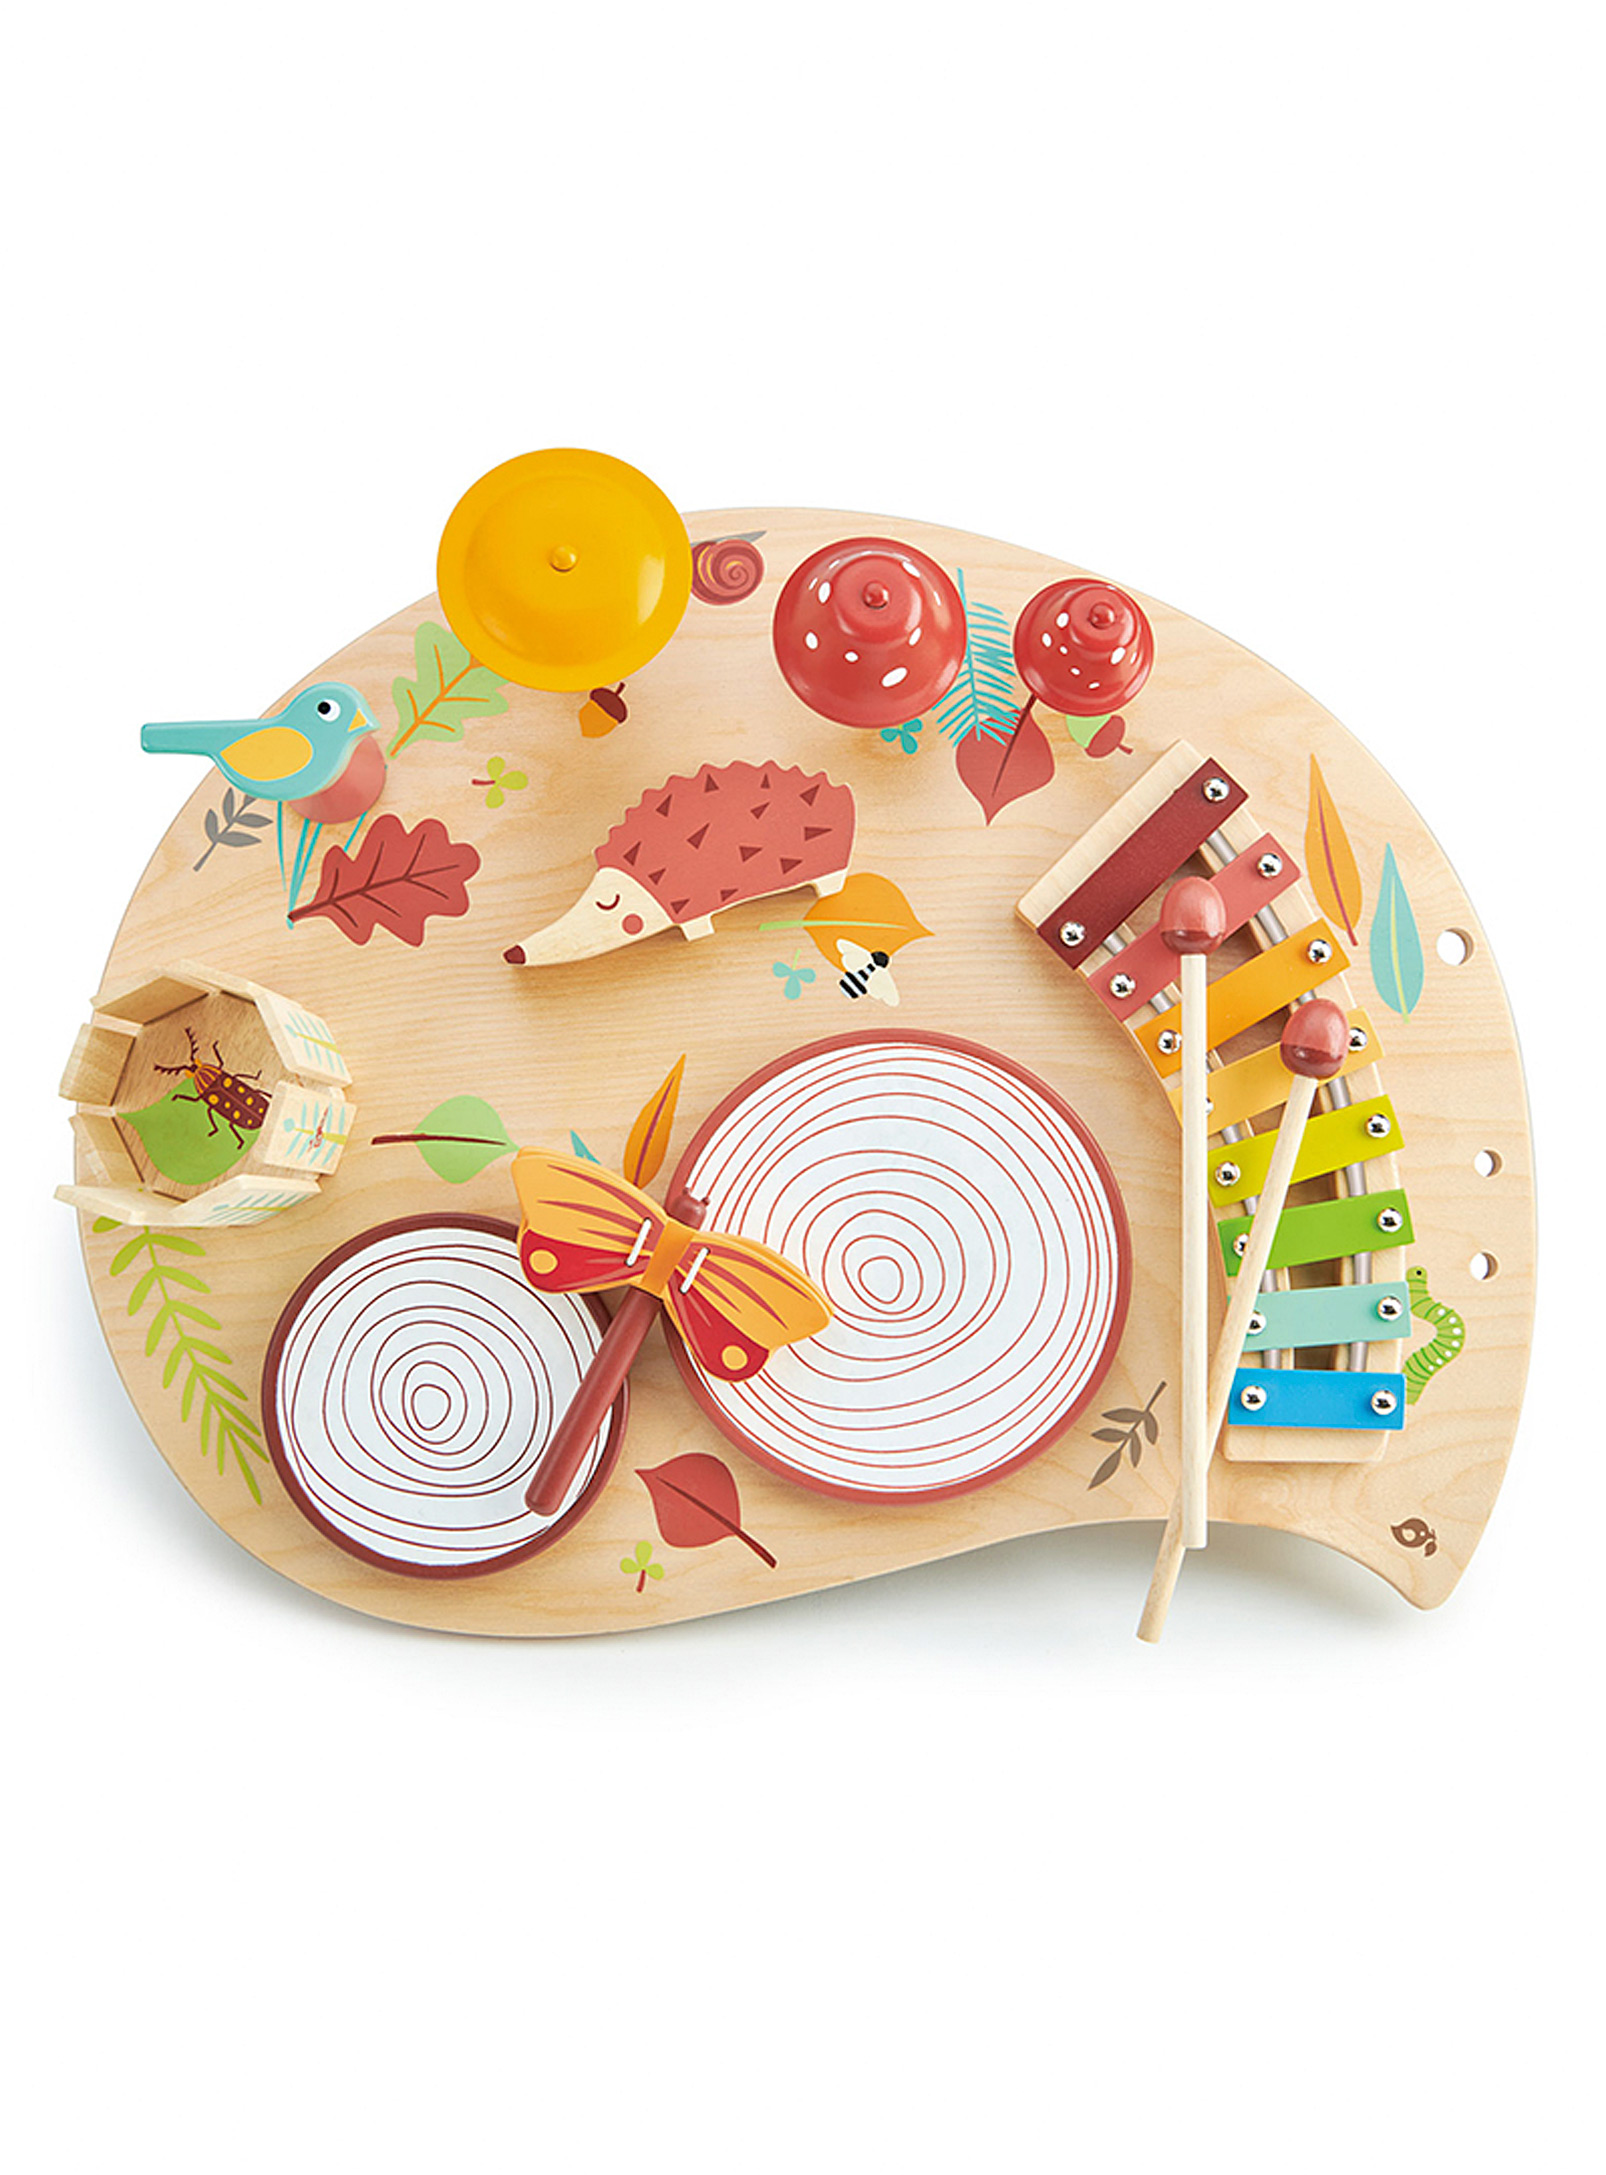 Tender Leaf Toys - Wooden musical table